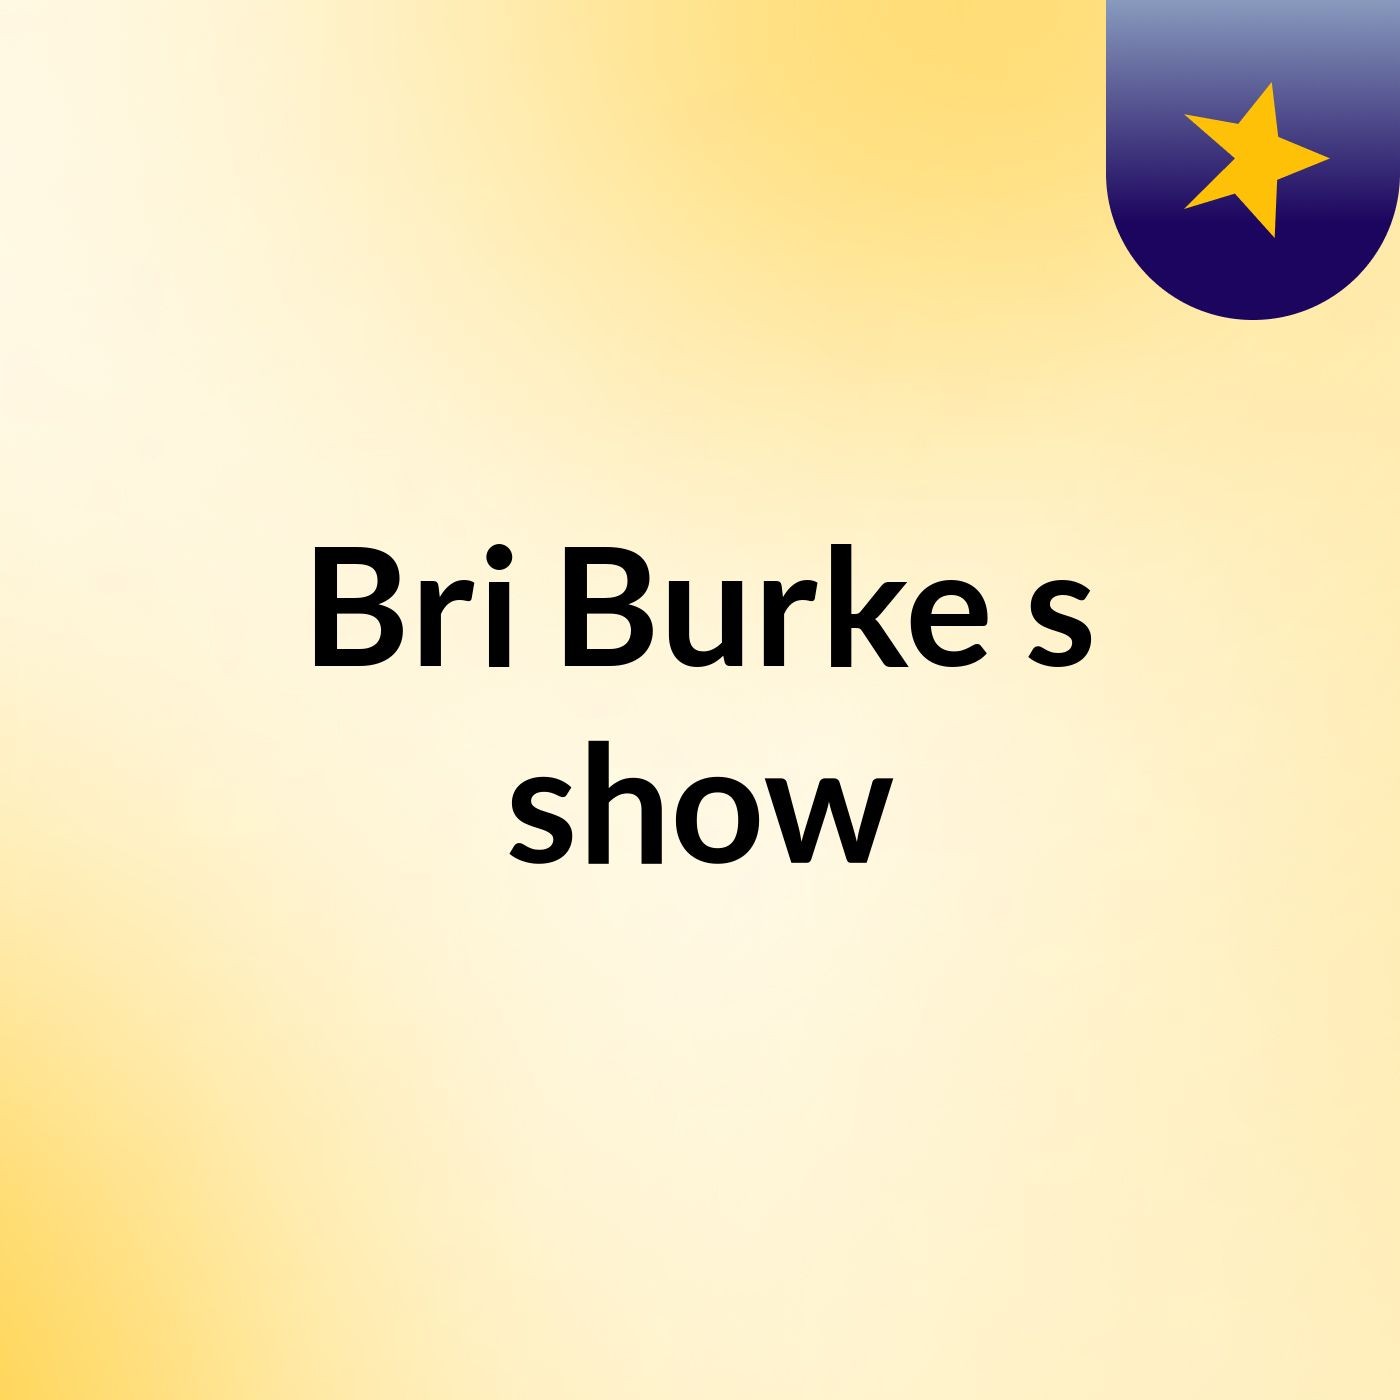 Bri Burke's show